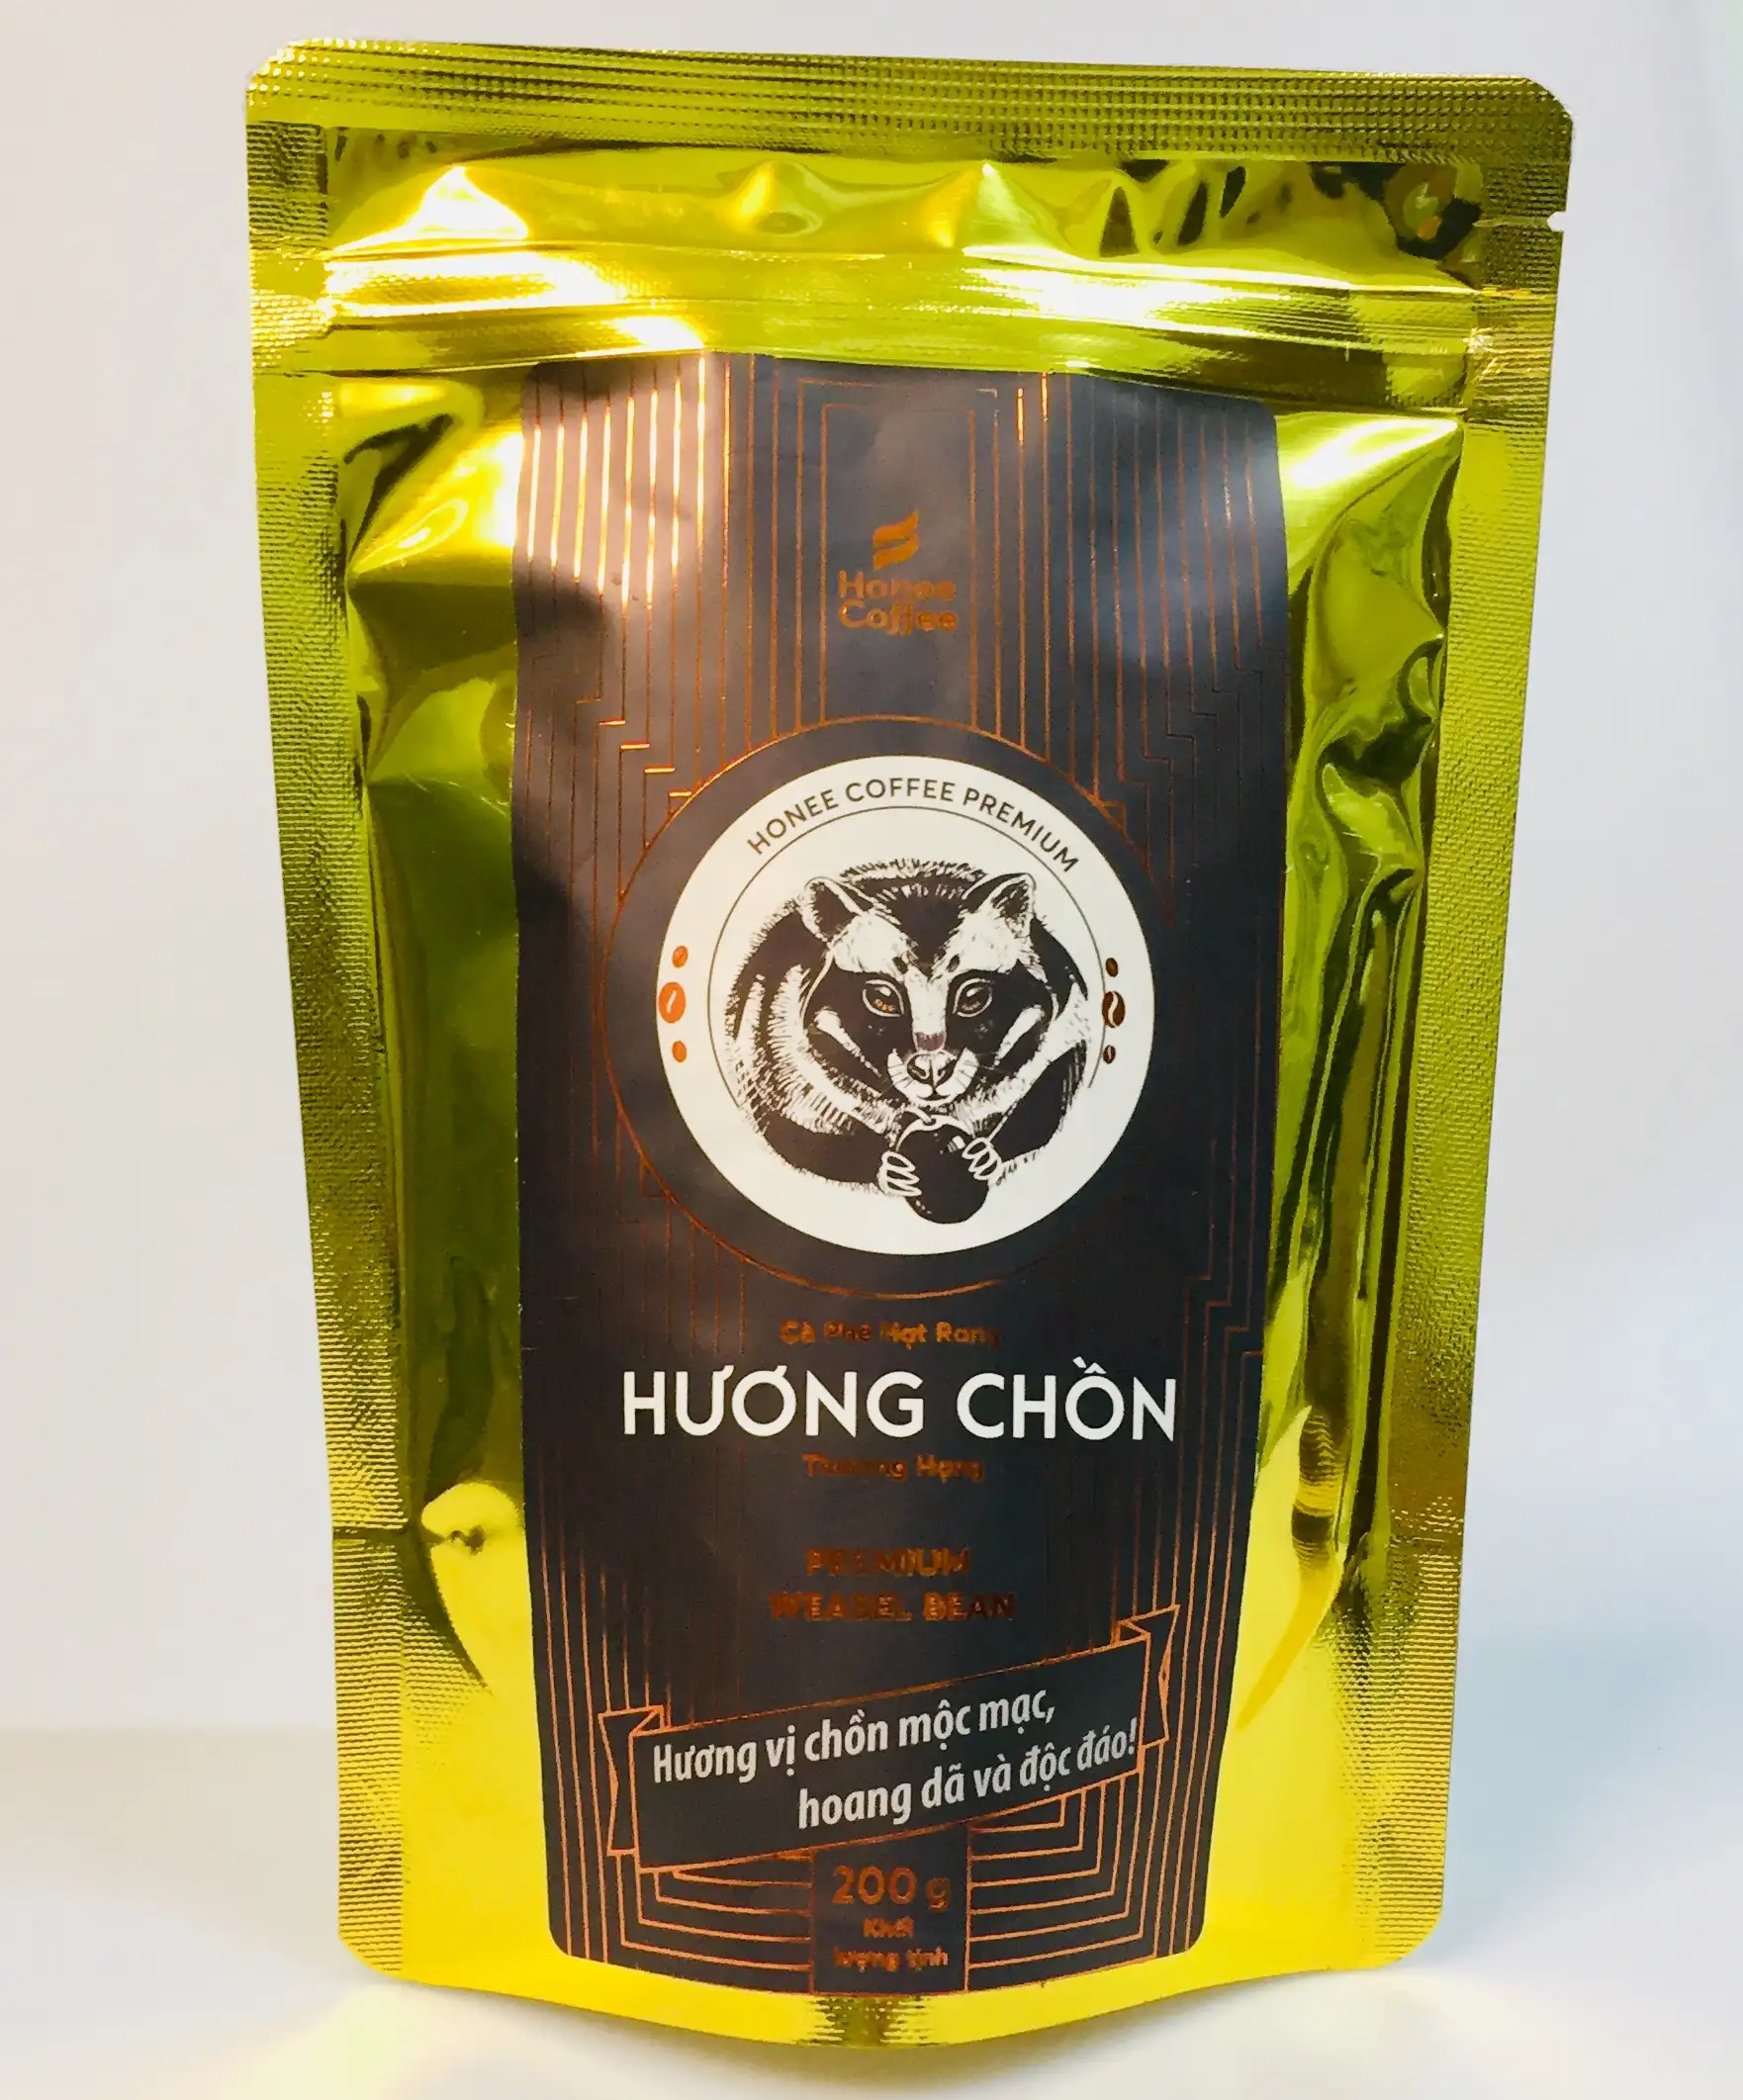 Honee קפה פרימיום-Kopi luwak קפה סמור כל שעועית בינוני צלוי מקור אחד מווייטנאם-זבד קפה